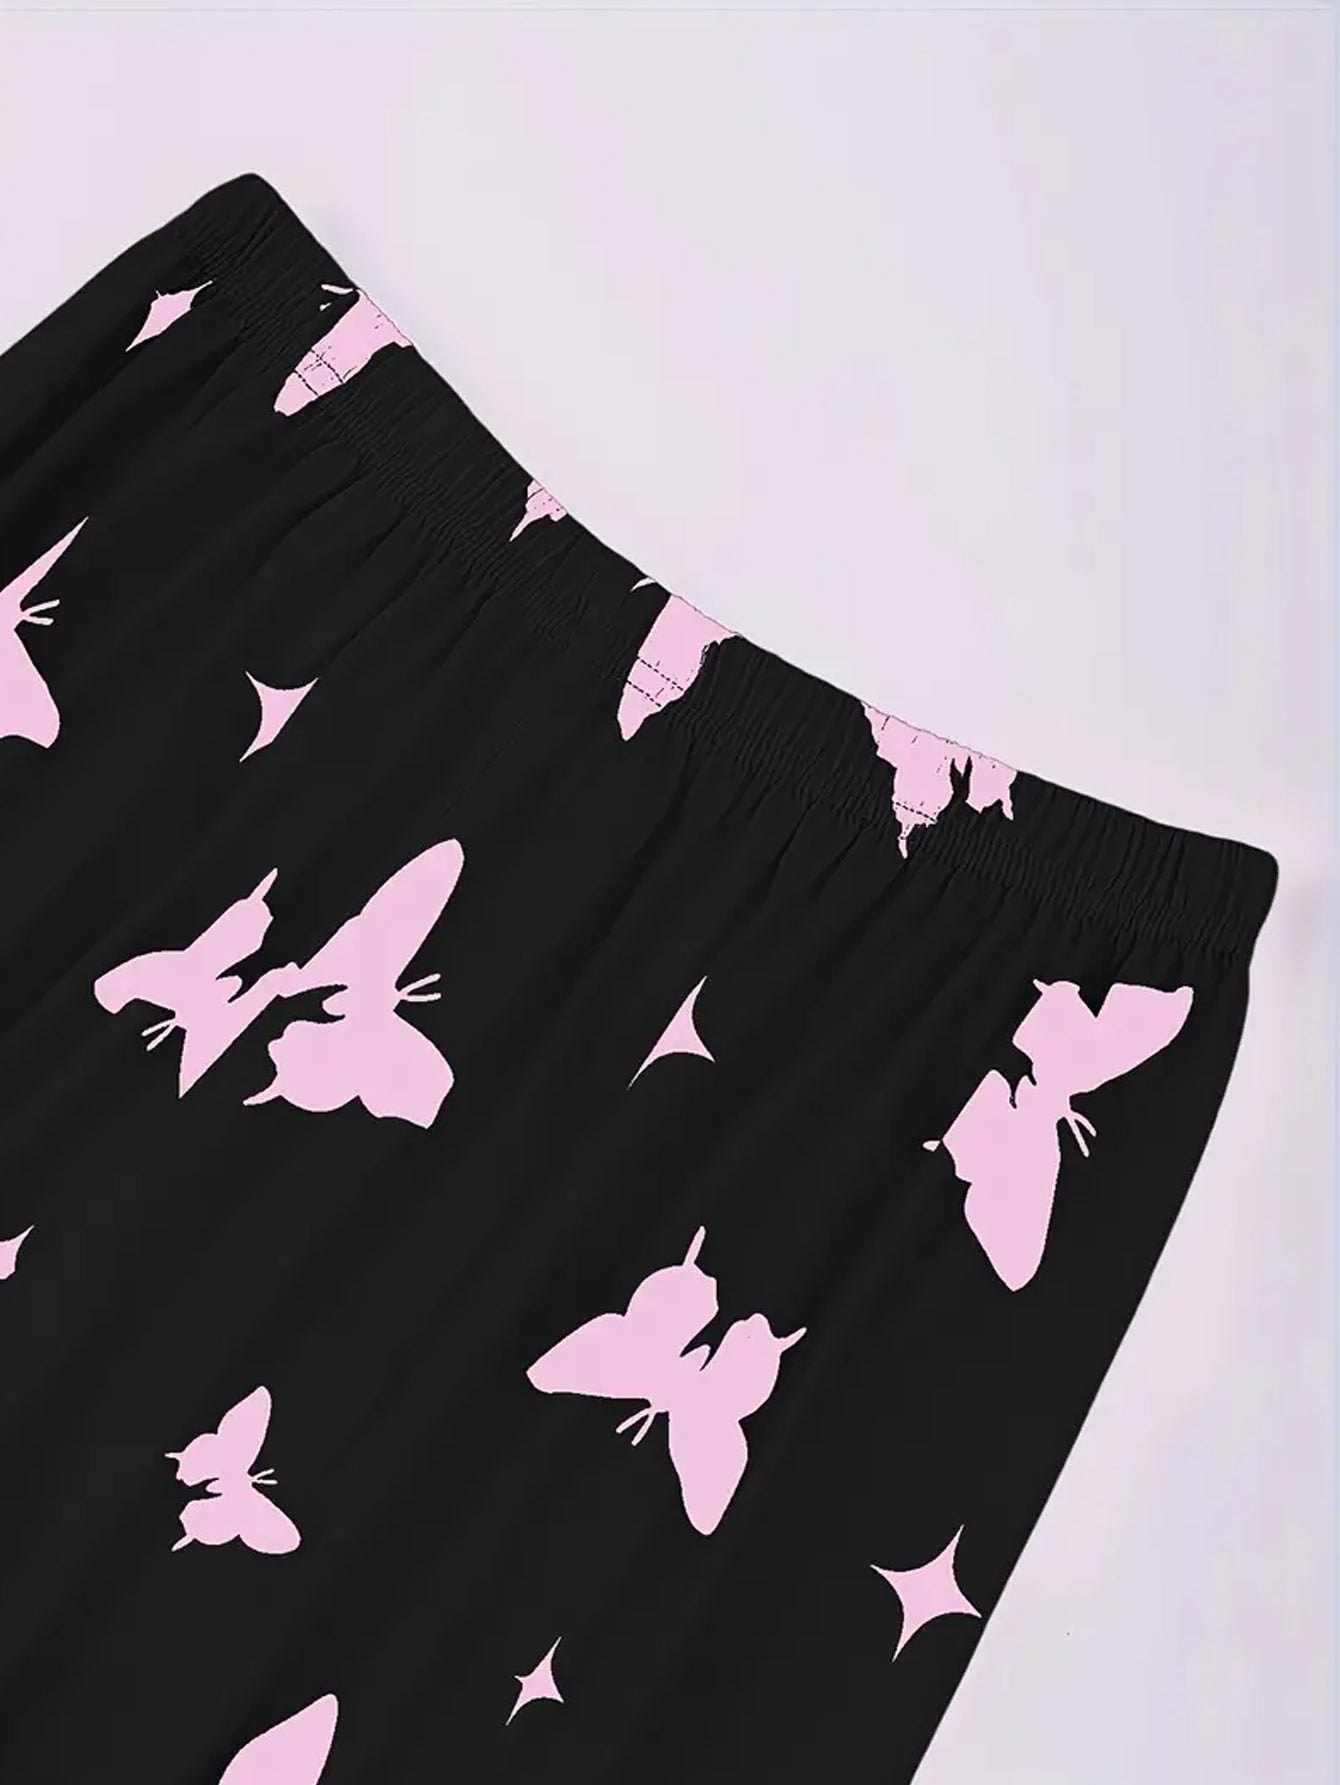 Heart Print Pajama Set - Black